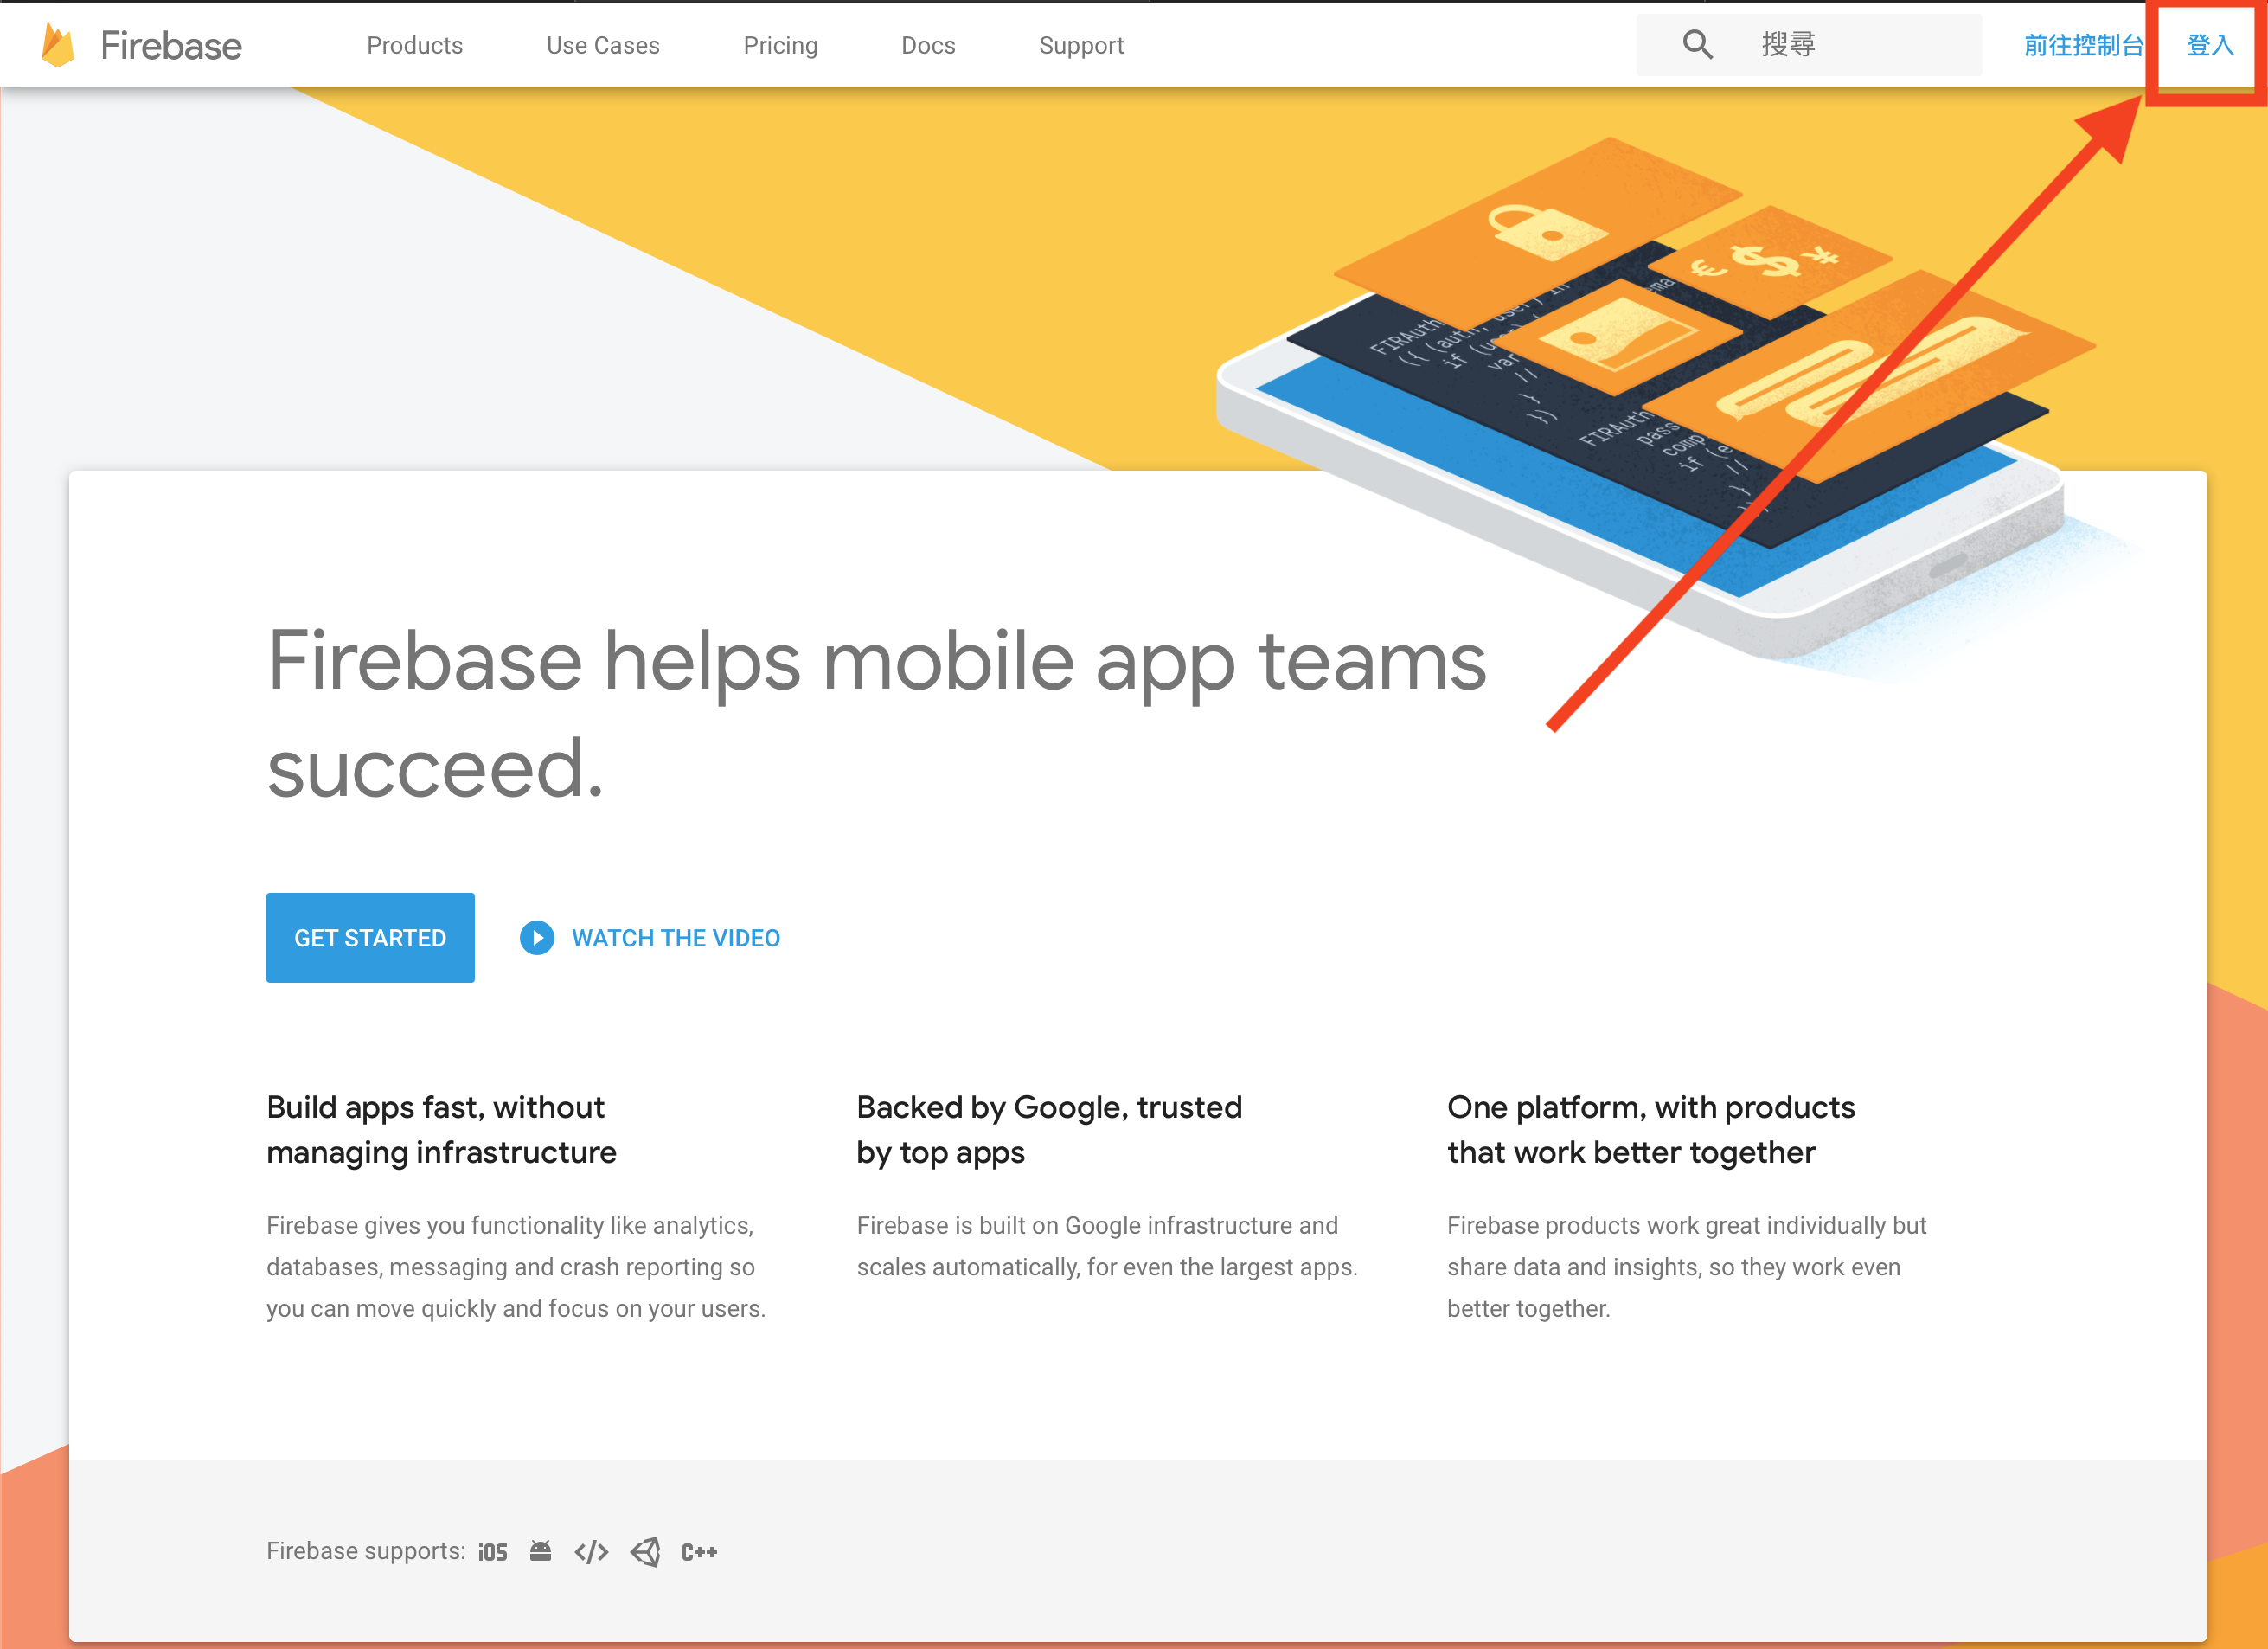 Blogimove推播工具，運用Google firebase cloud messaging打造絕佳網站資訊傳送的強大功能 | BLOGIMOVE部落客專屬外掛 @Blog-i-Move